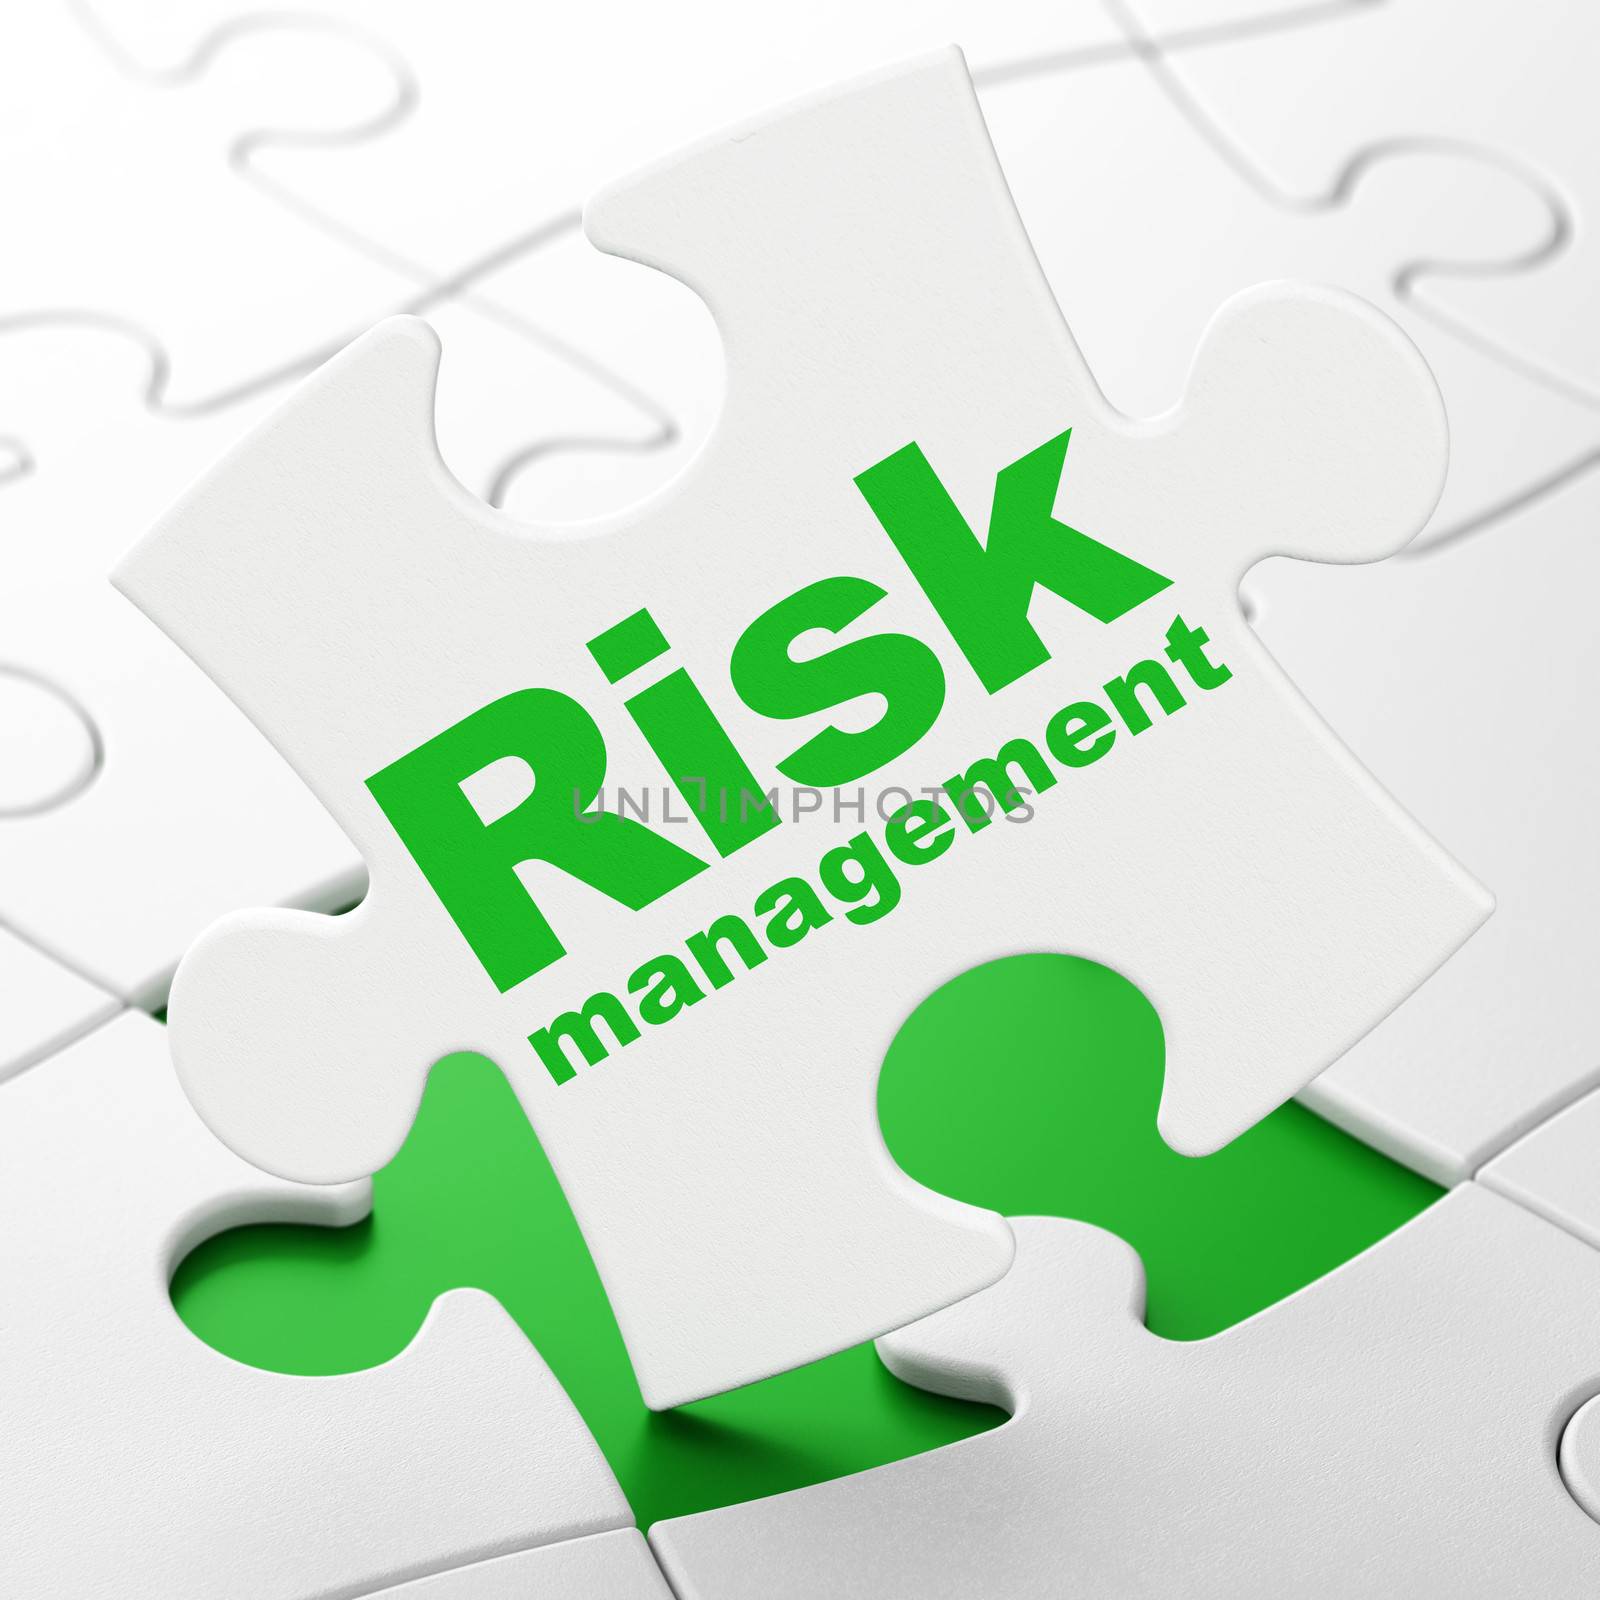 Finance concept: Risk Management on White puzzle pieces background, 3d render